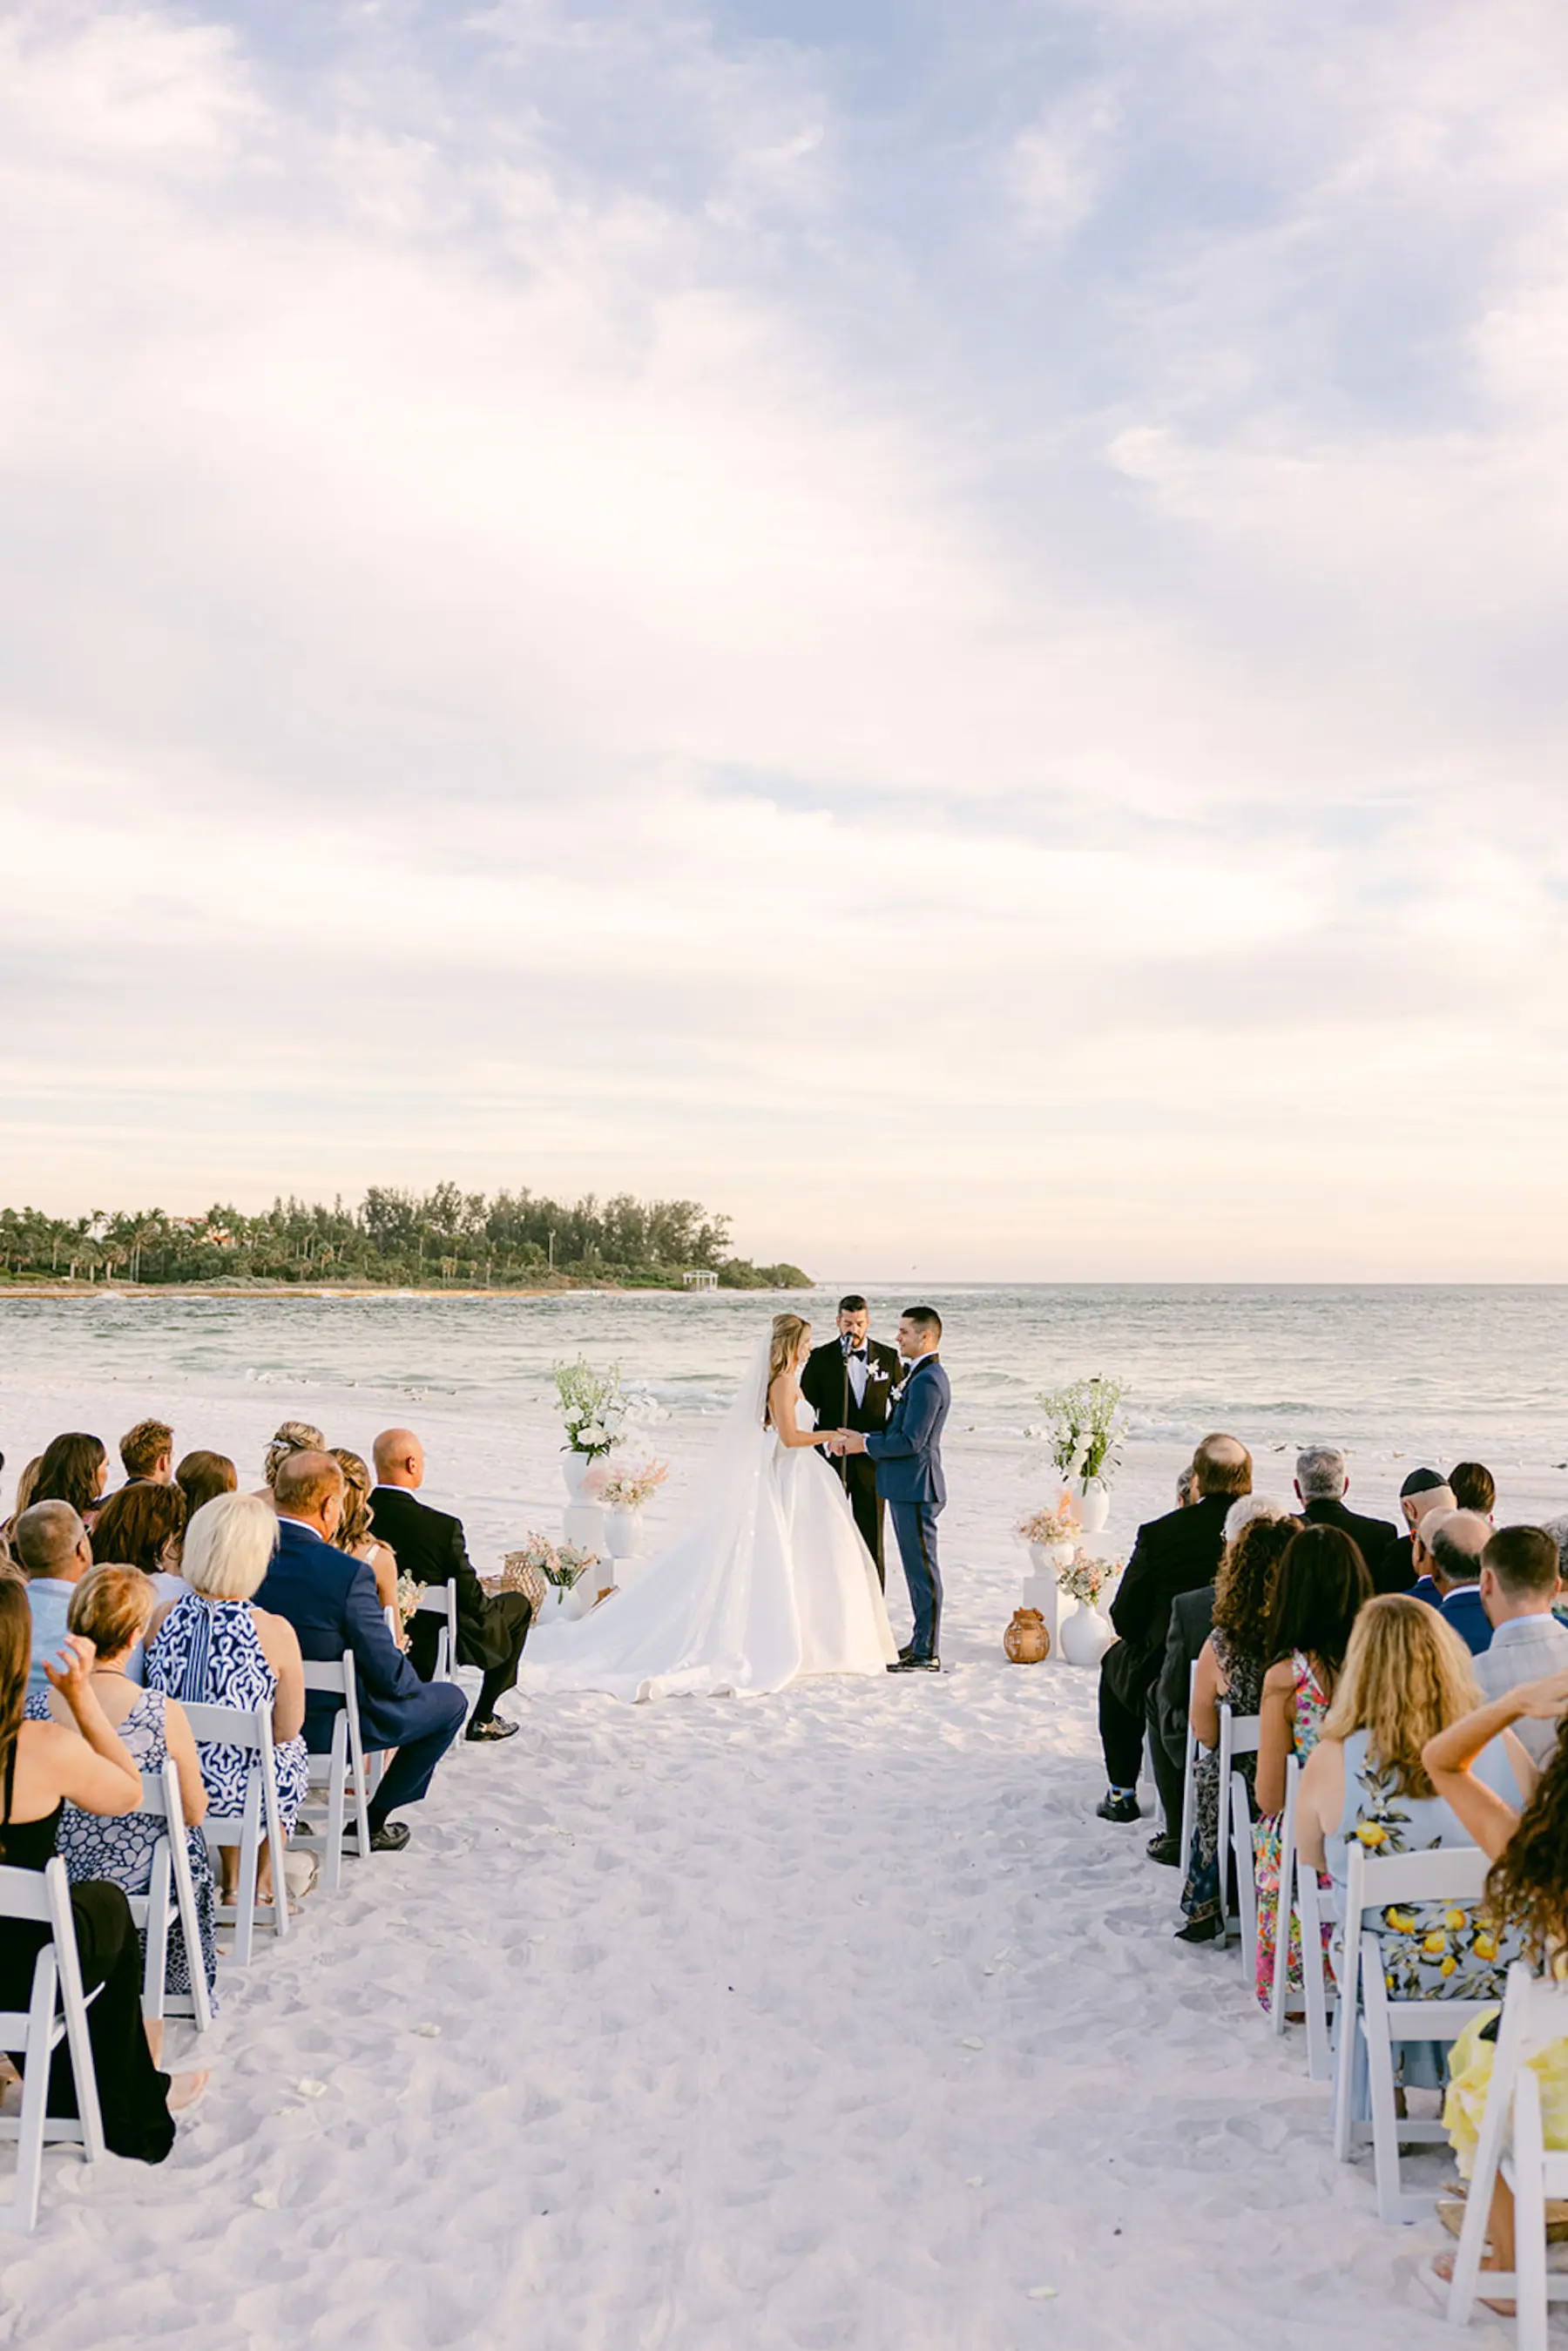 Bride and Groom Outdoor Florida Wedding Ceremony Ideas | Sarasota Waterfront Beach Venue The Resort at Longboat Key Club | Planner Elegant Affairs by Design